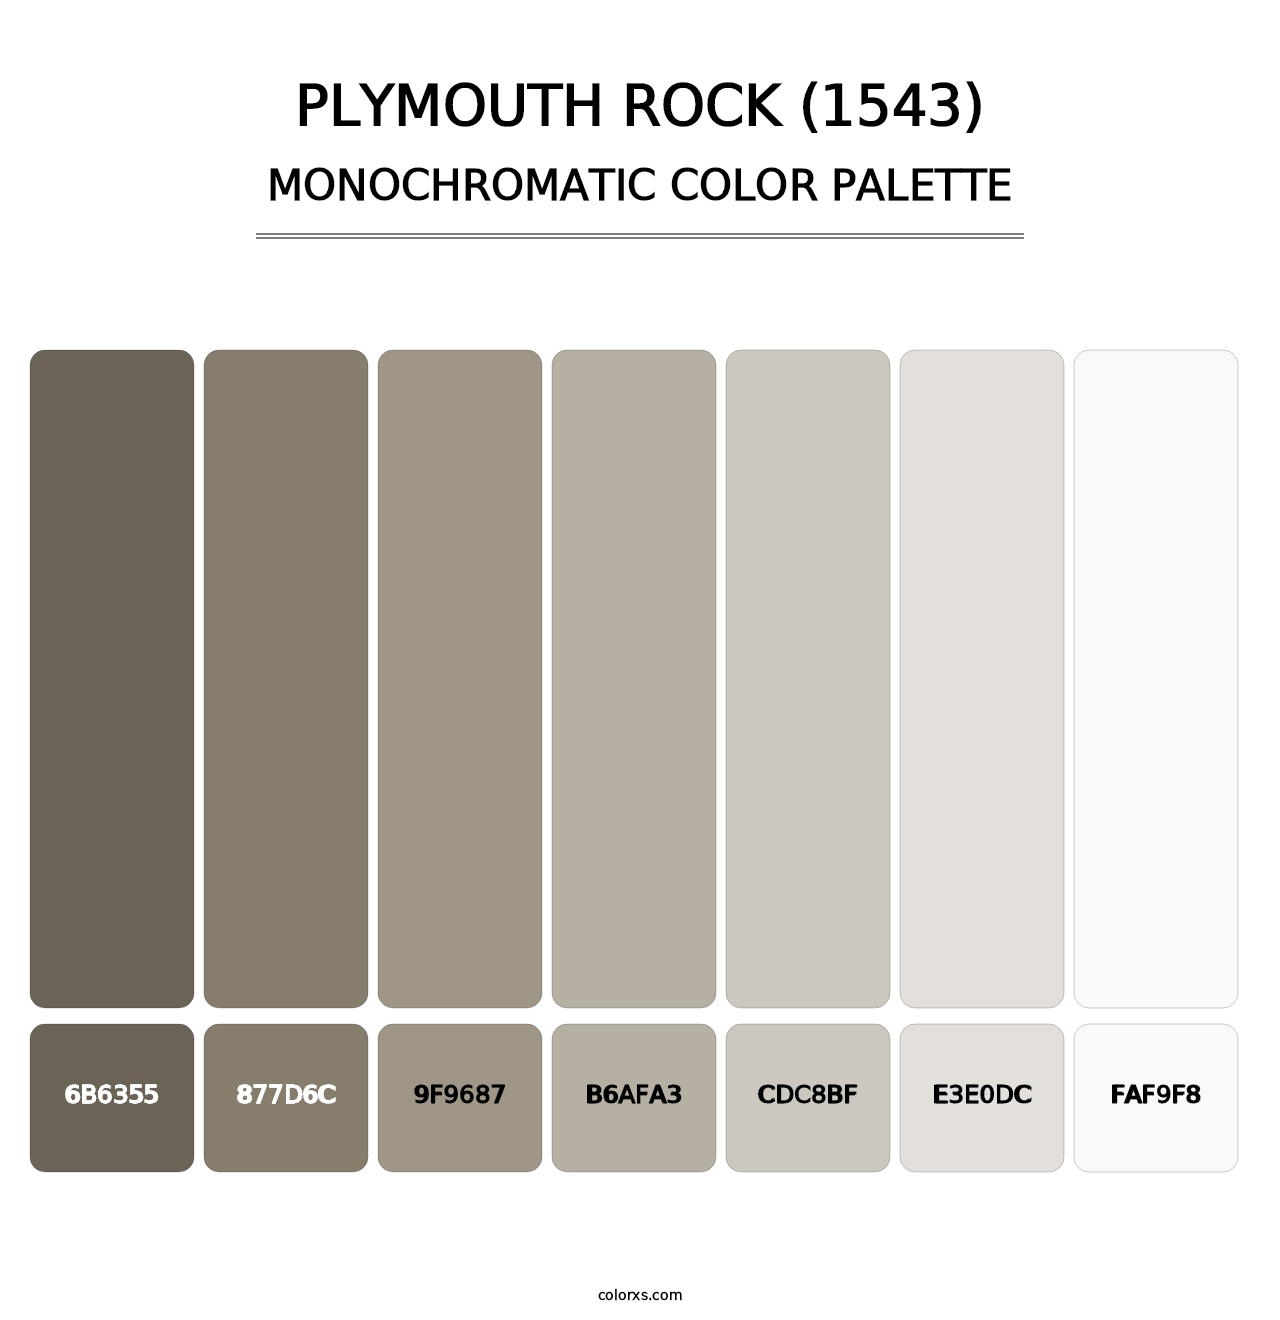 Plymouth Rock (1543) - Monochromatic Color Palette